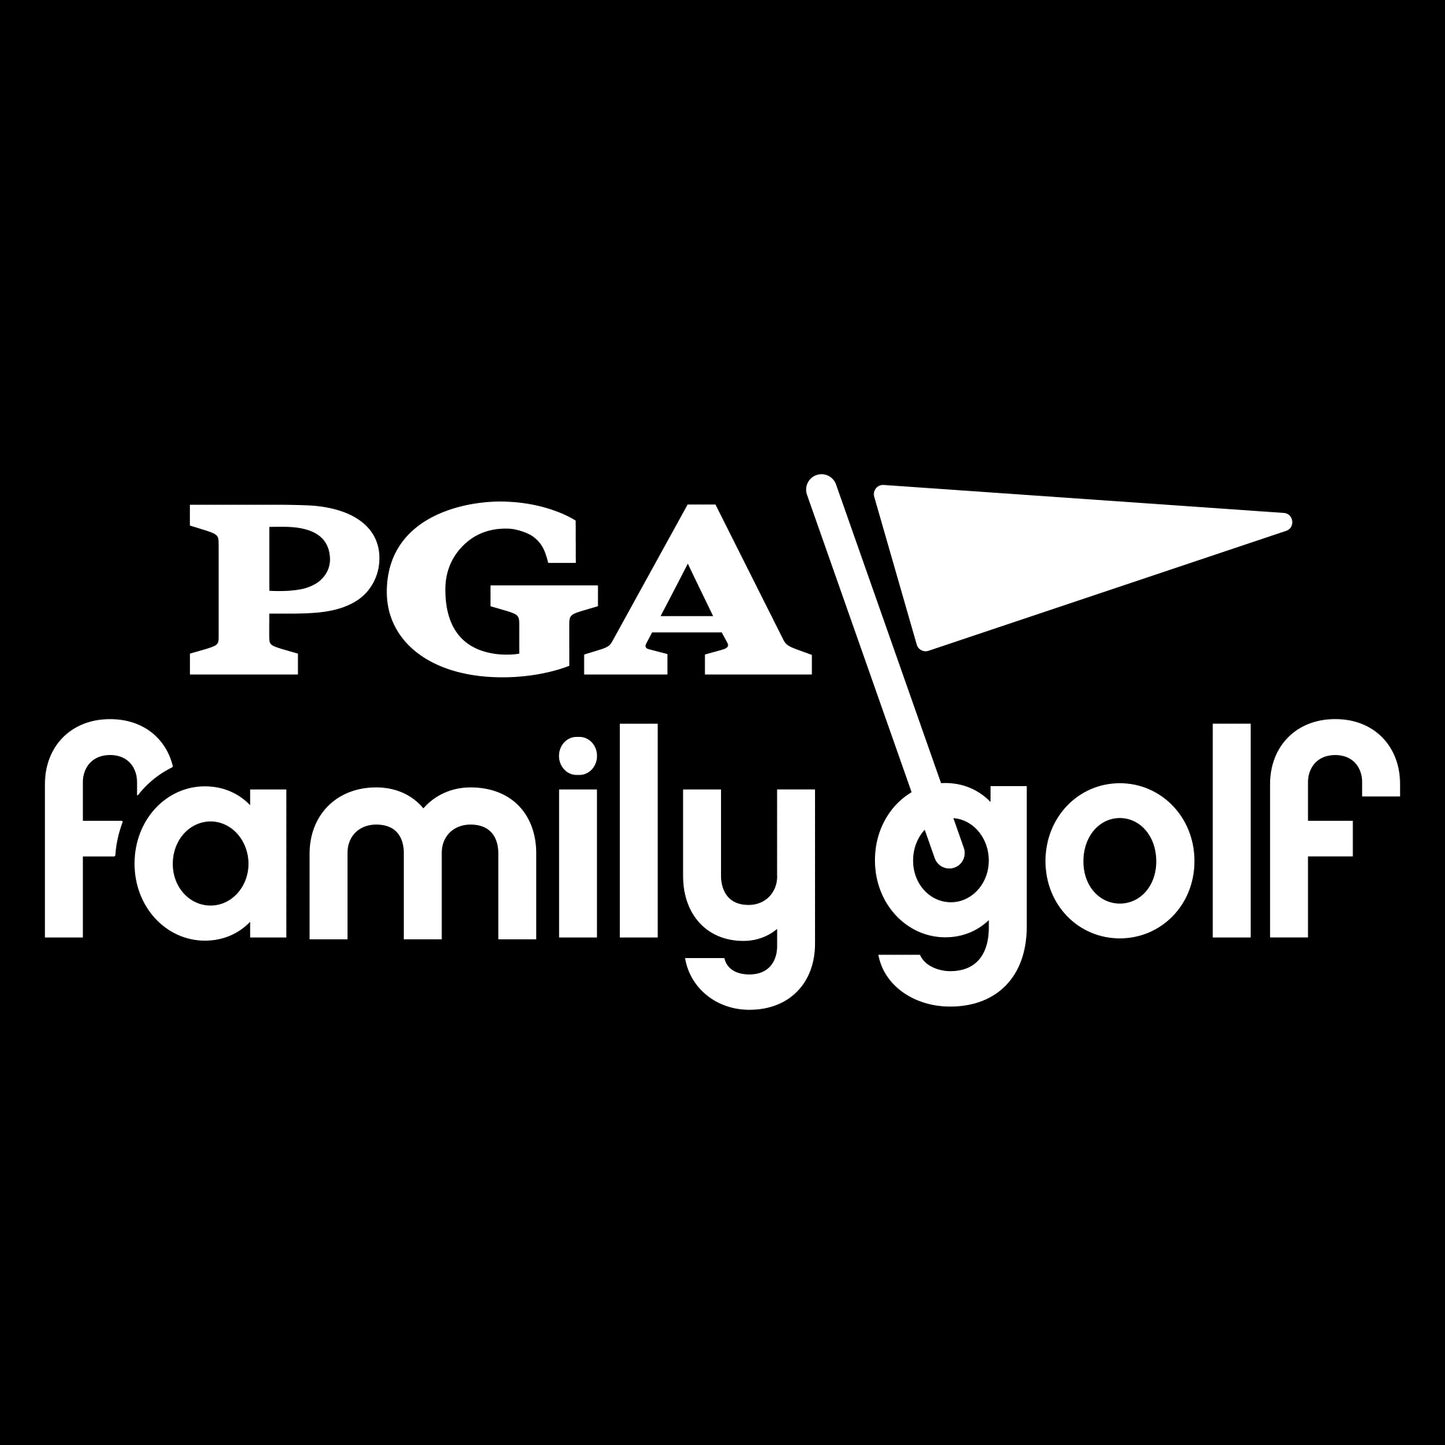 PGA Family Golf Youth T-Shirt - Black